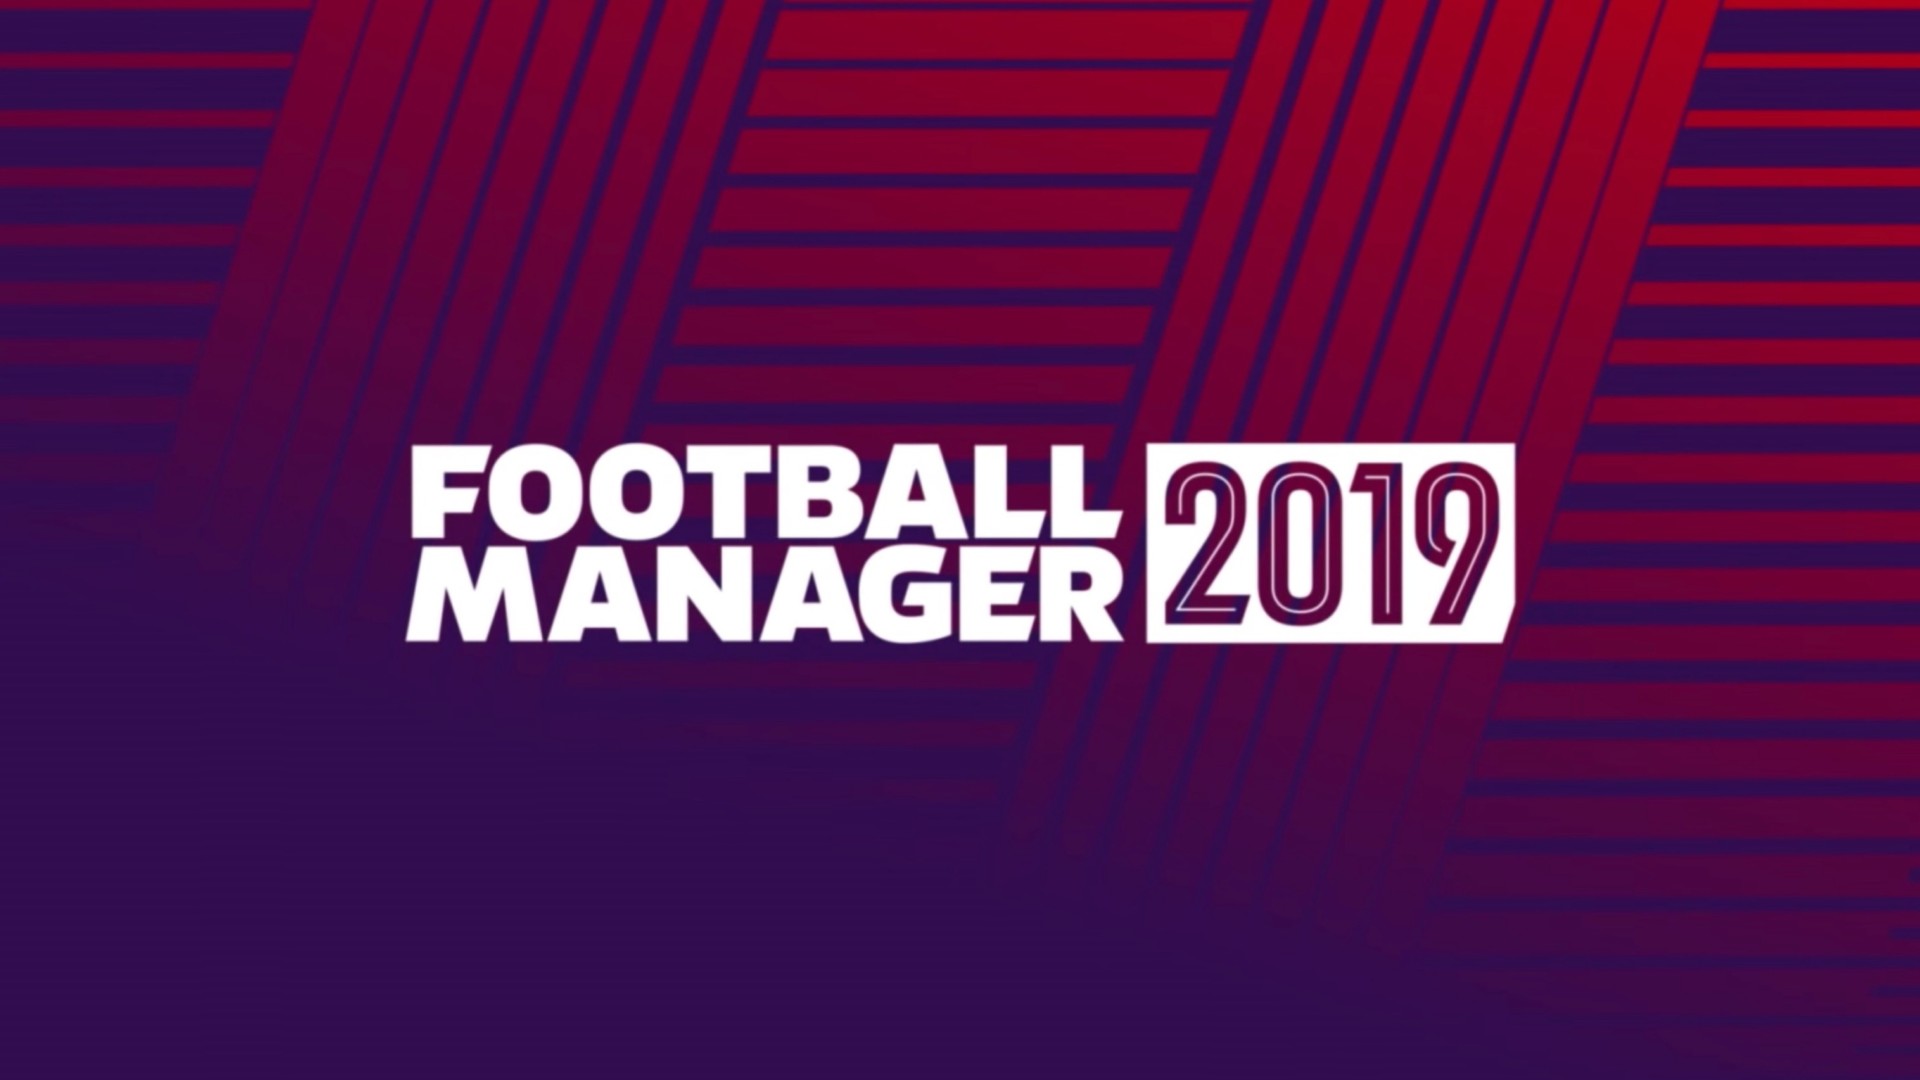 Football Manager 2019 logo